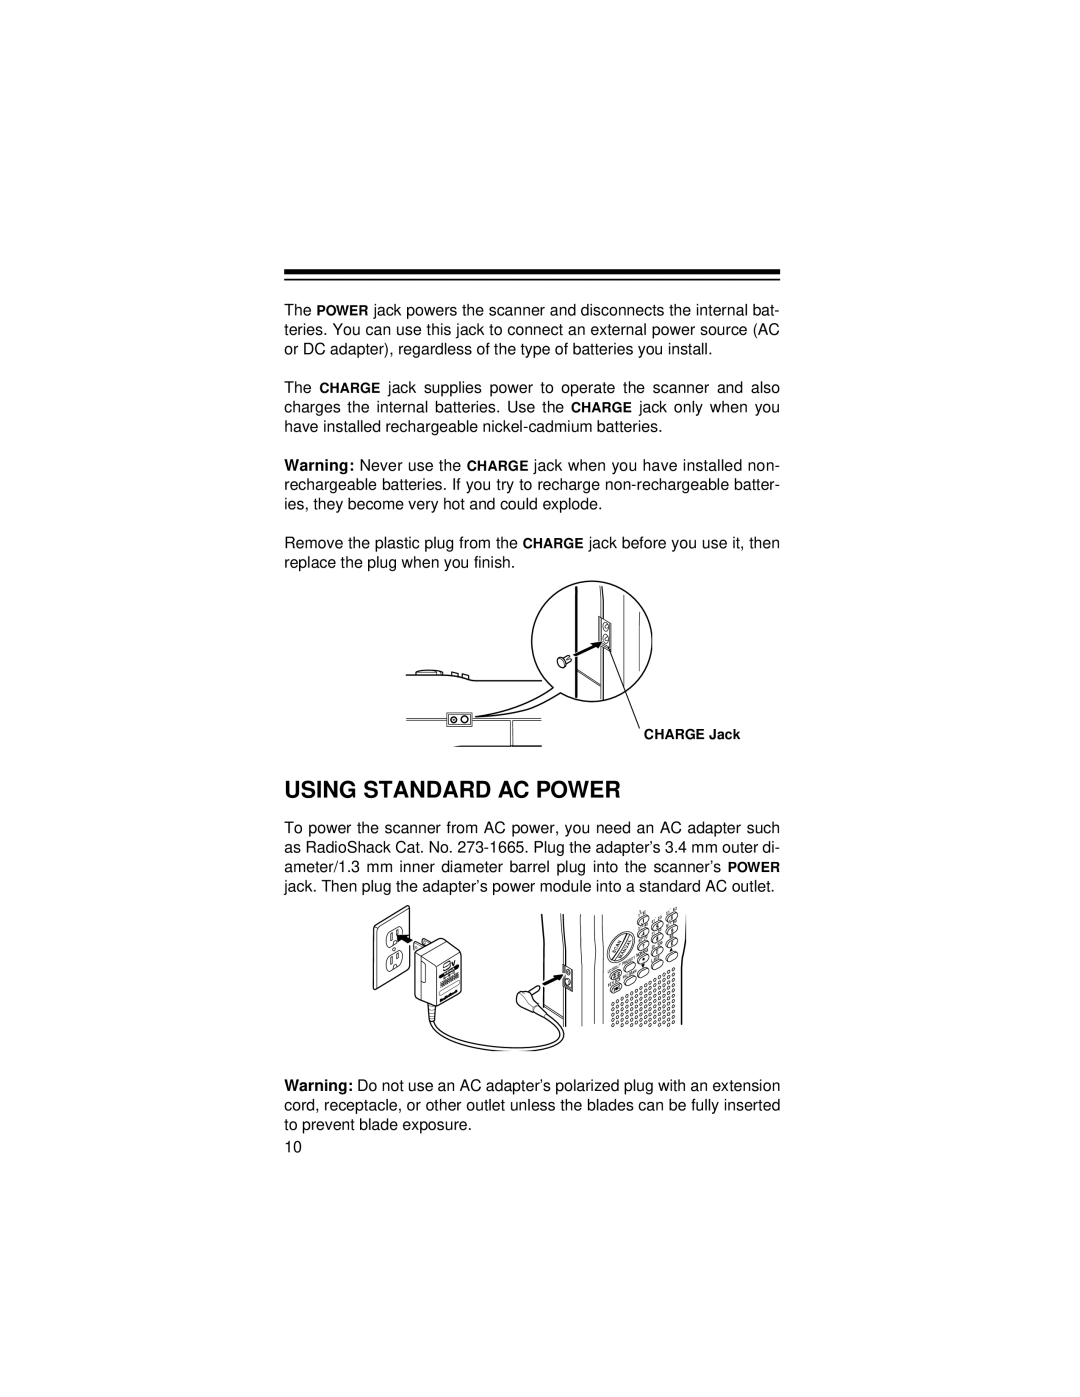 Radio Shack Pro-71 owner manual Using Standard AC Power 